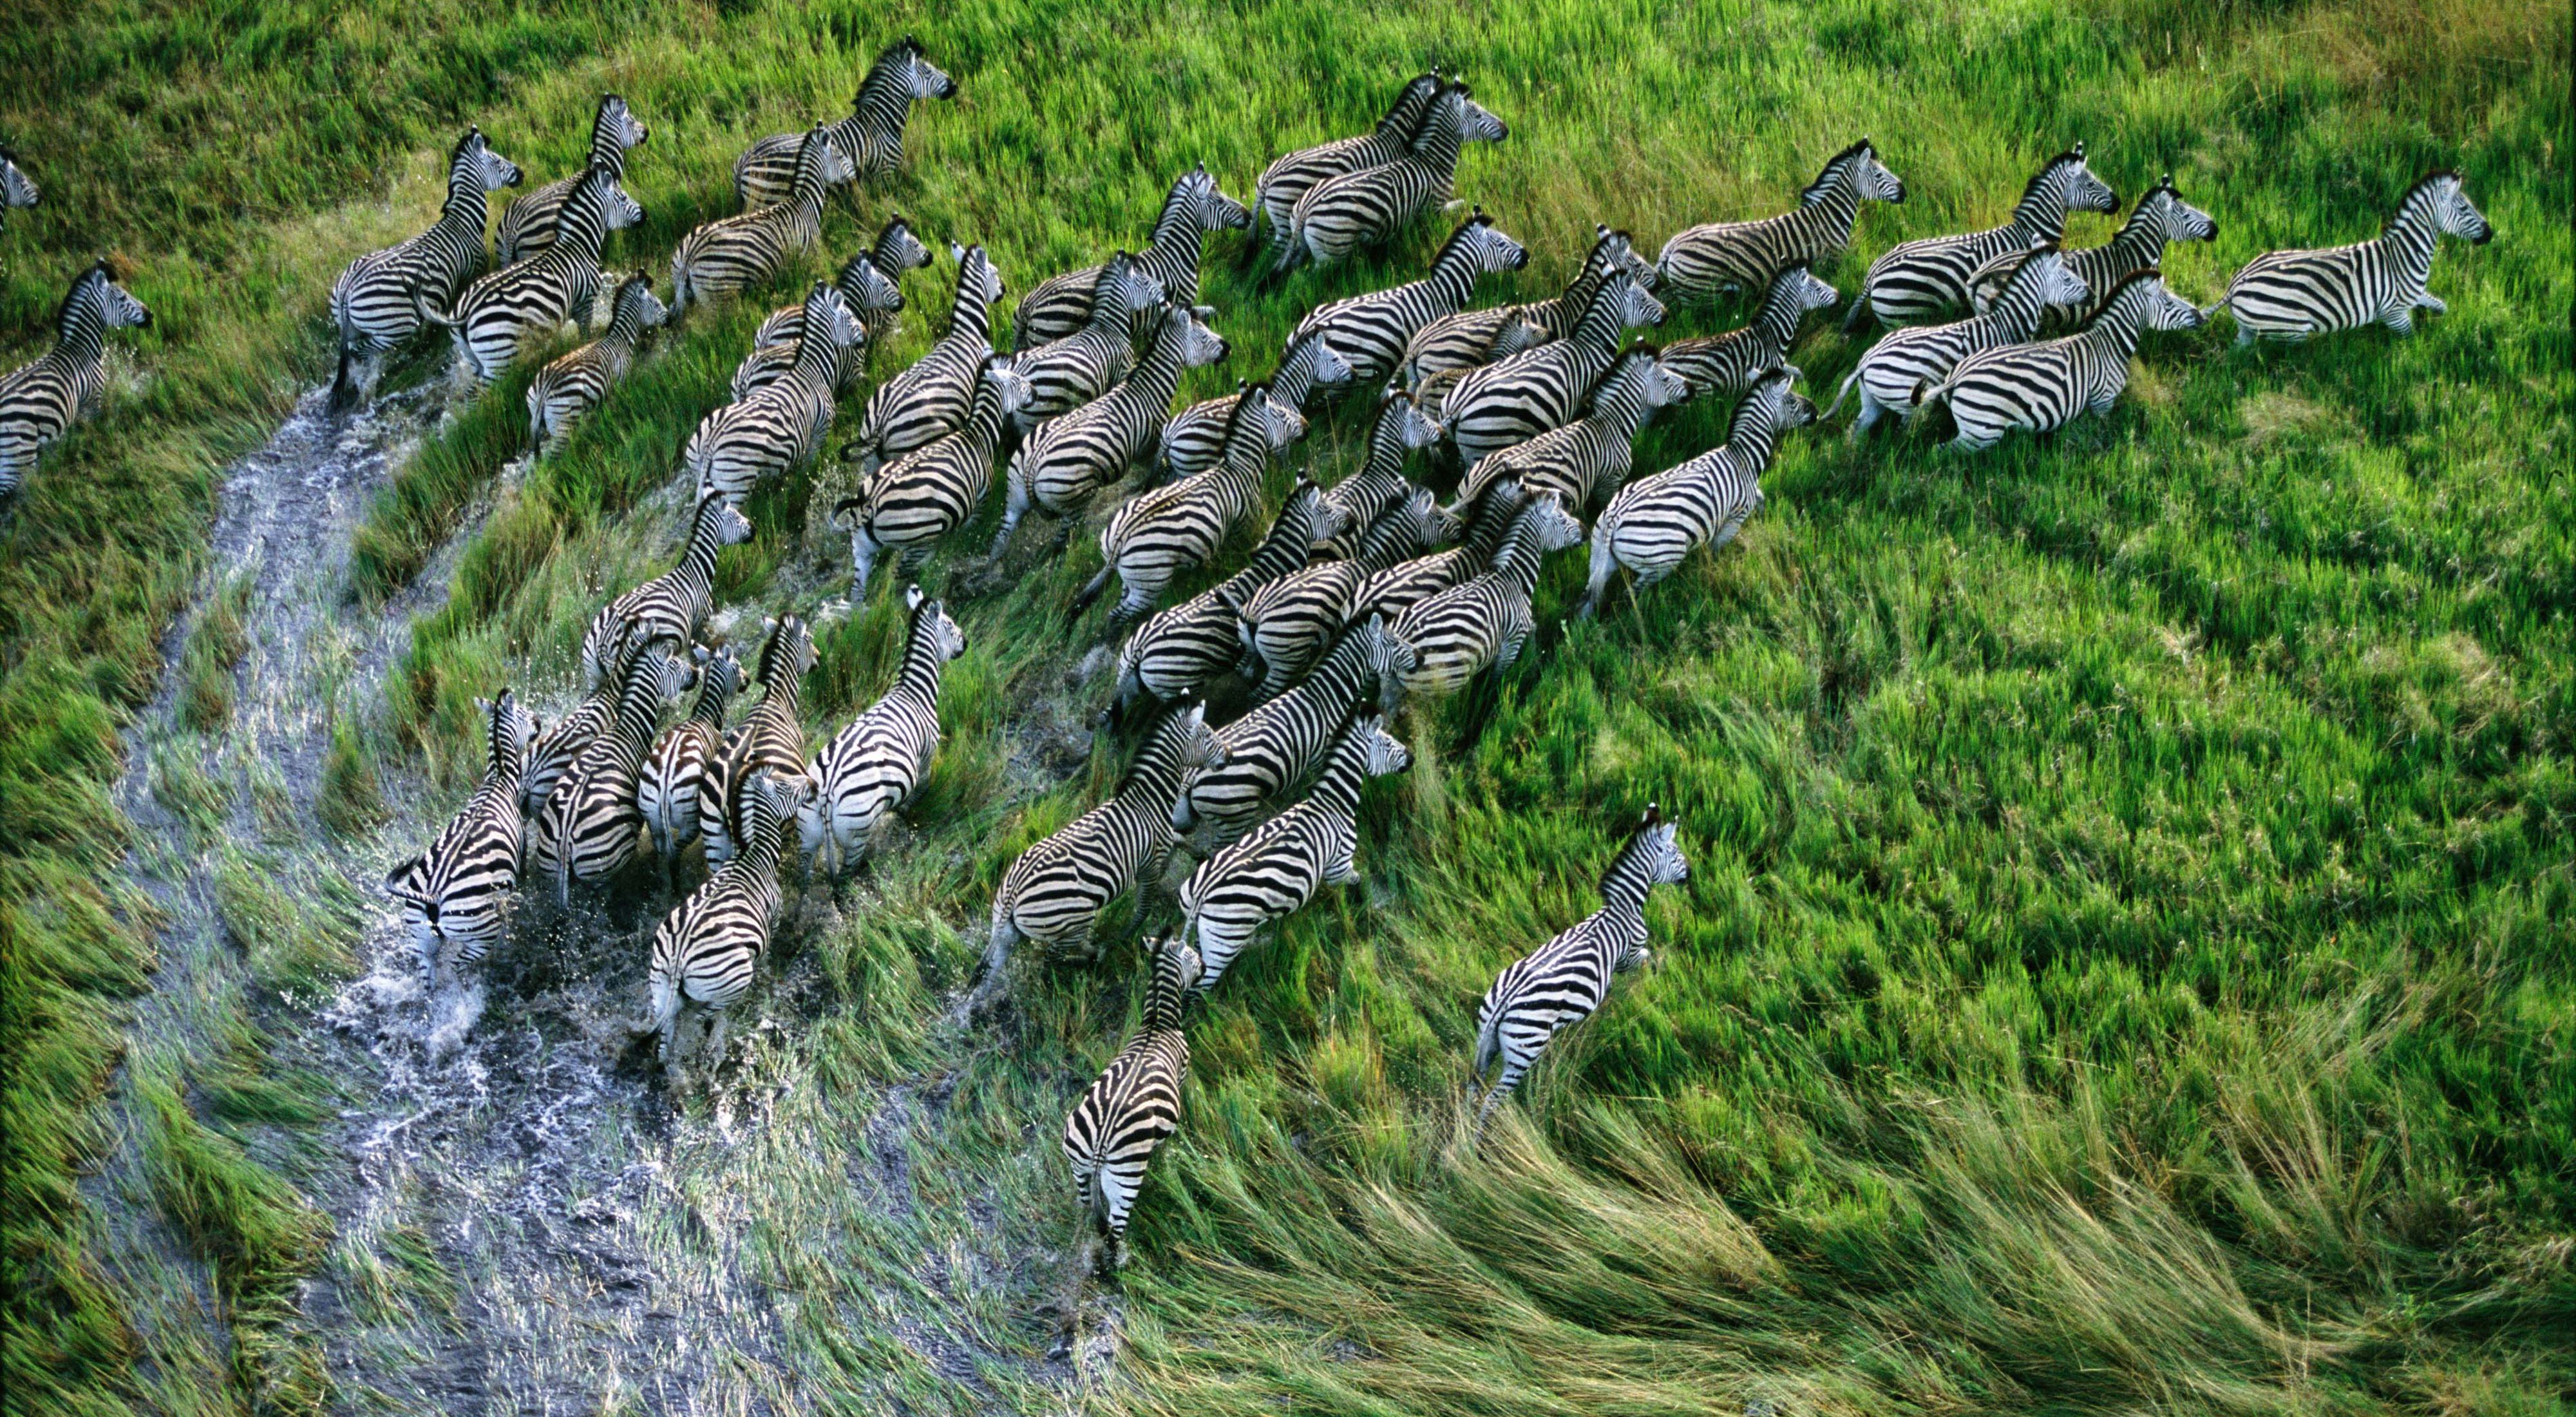 Zebras running across flooded grasslands